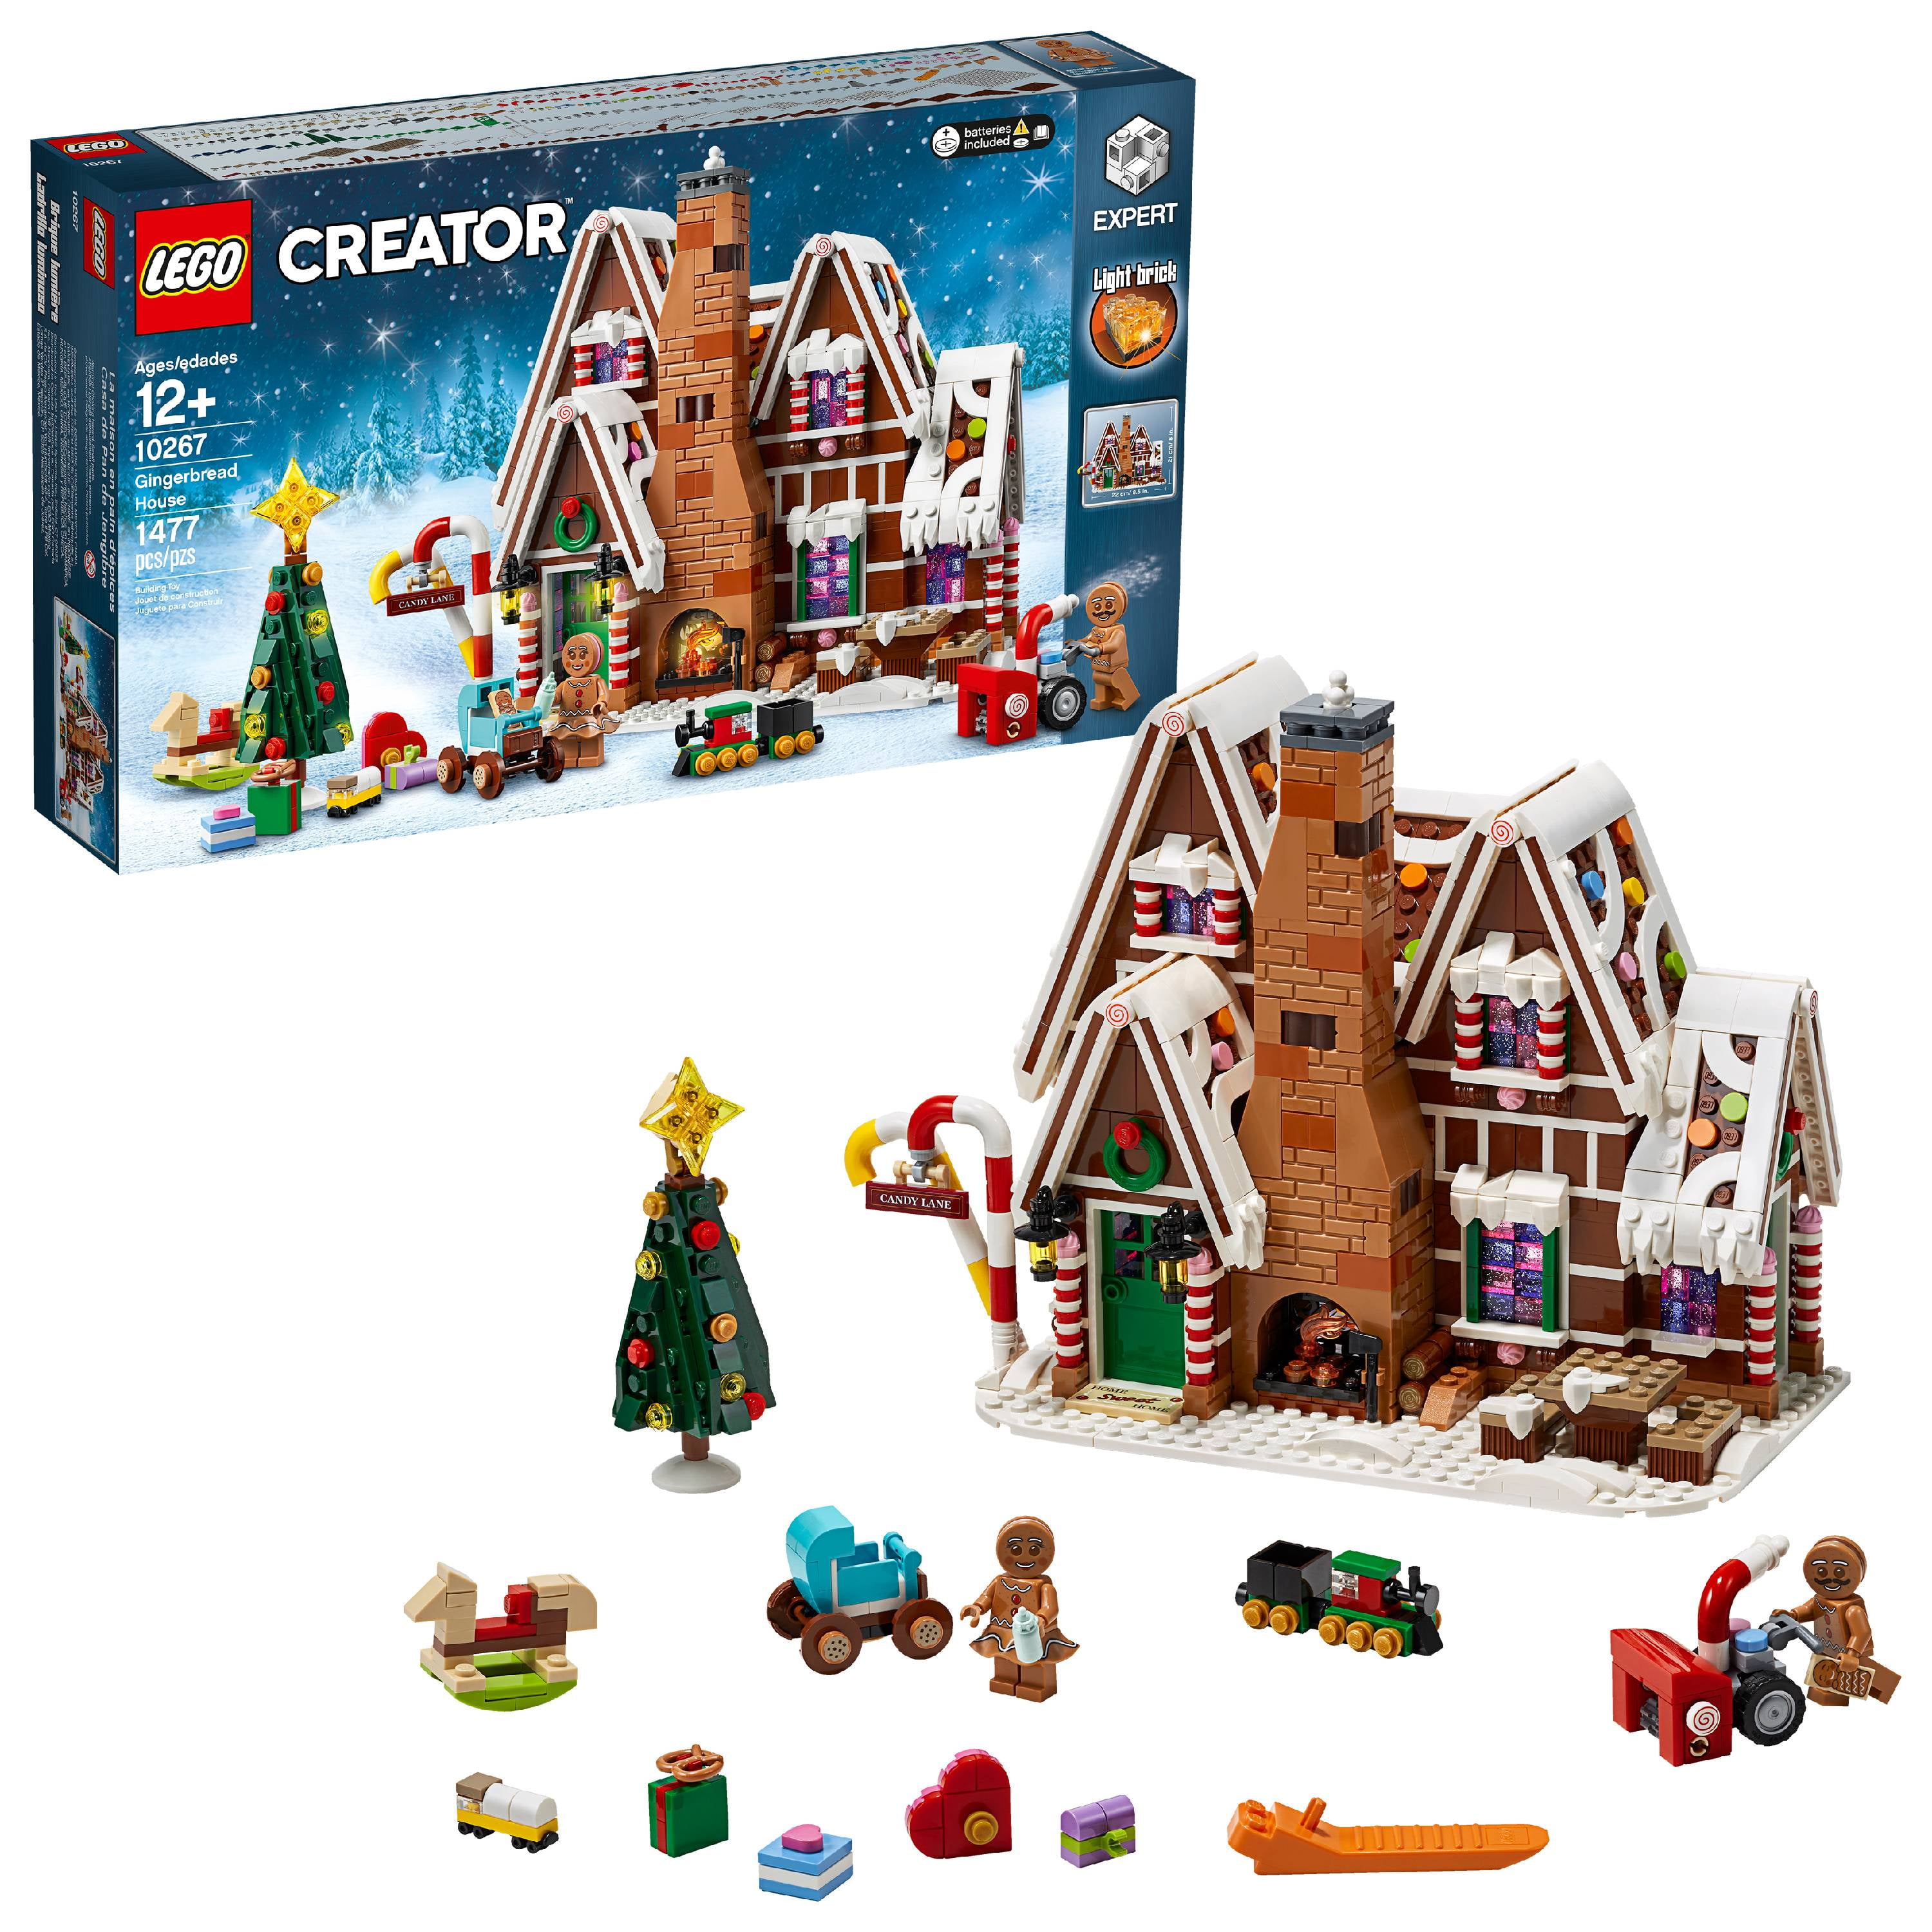 Lego Creator Expert Gingerbread House 10267 Building Kit 1477